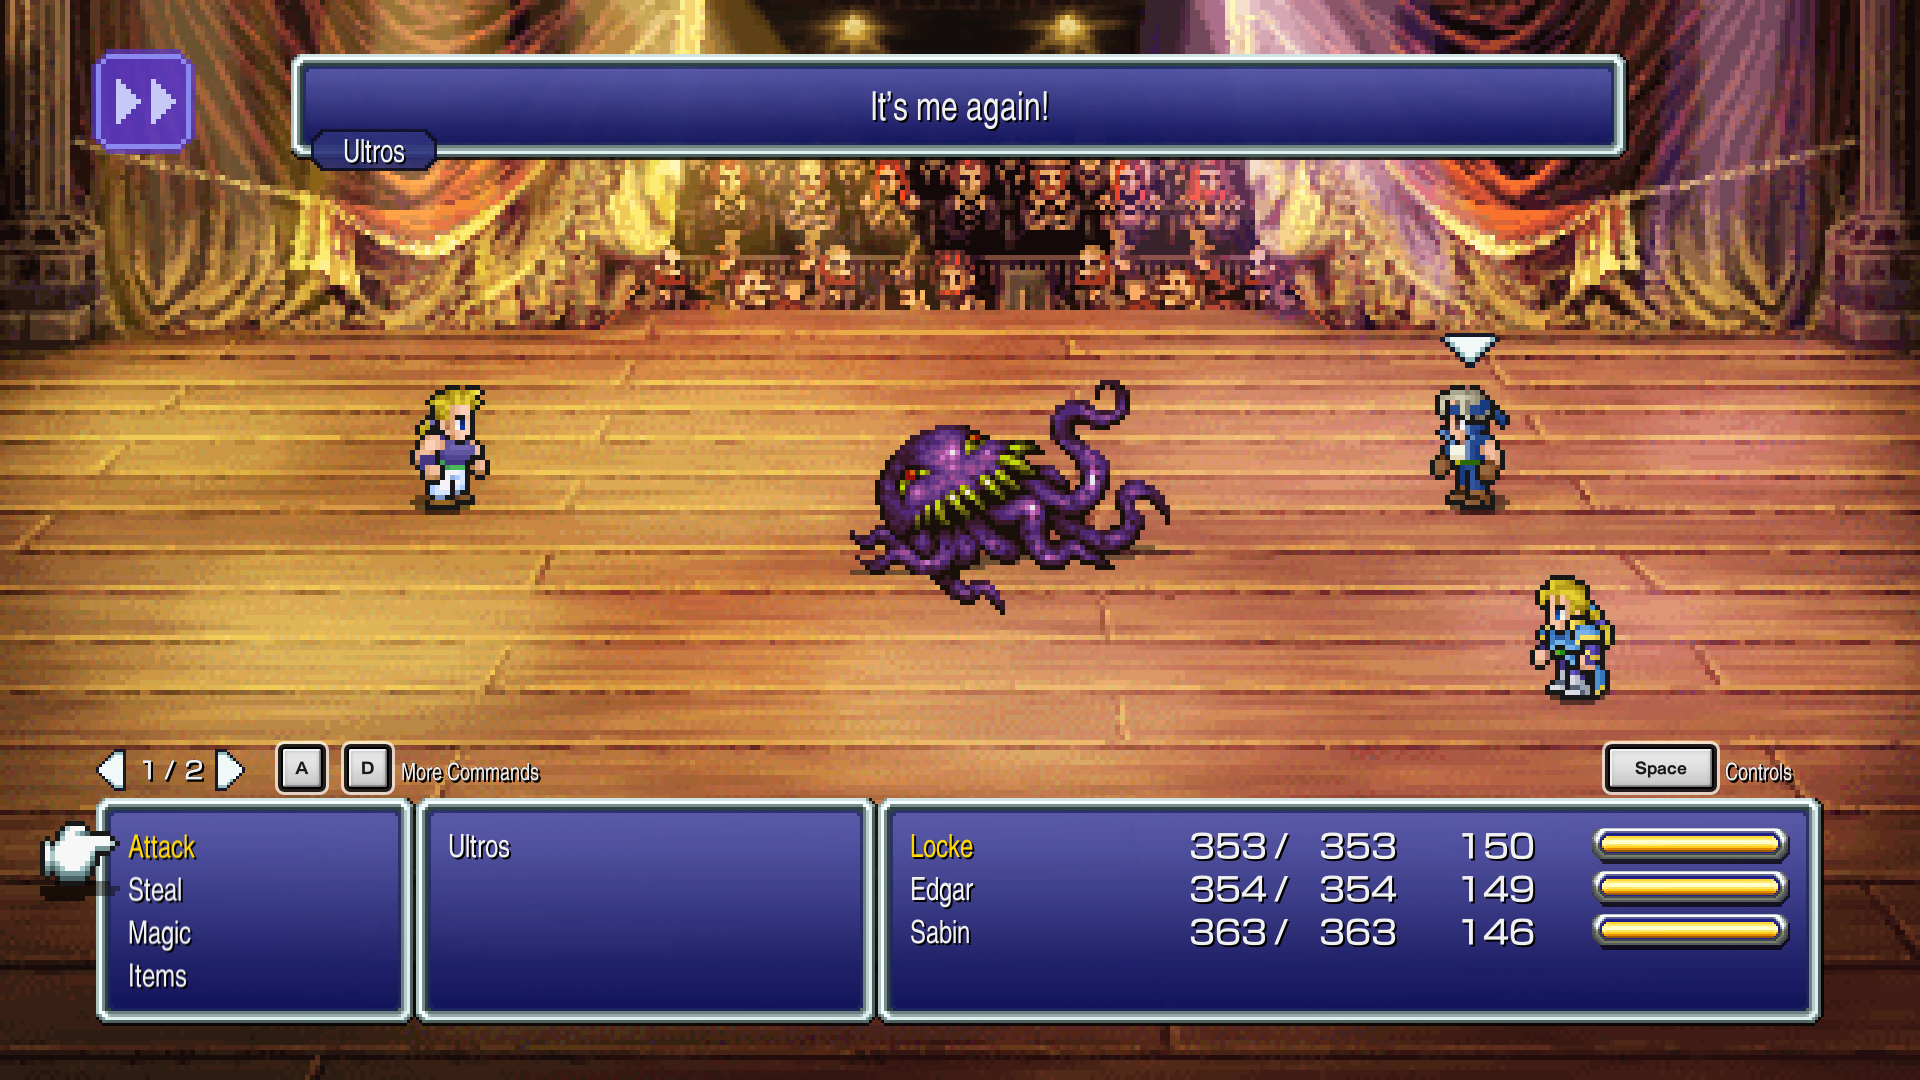 Ultros, a purple octopus-sorta monster with big fangs, says 'It's me again!' in a Final Fantasy VI Pixel Remaster battle screenshot.